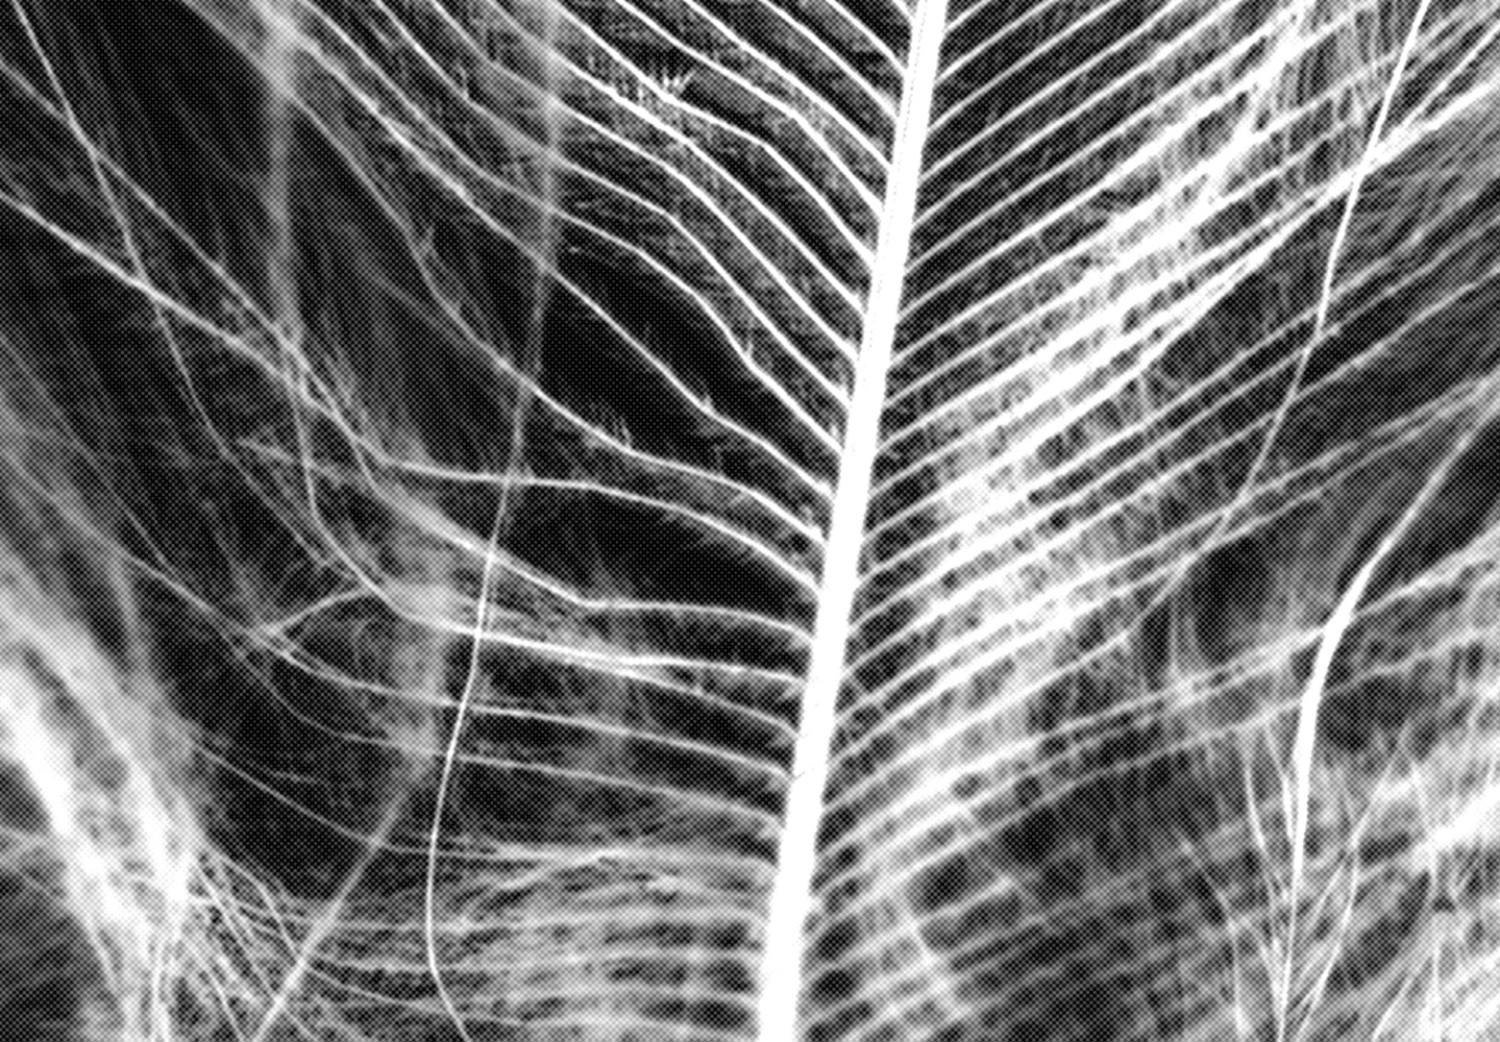 Canvas White Feather (1-piece) Vertical - white bird feather on black background